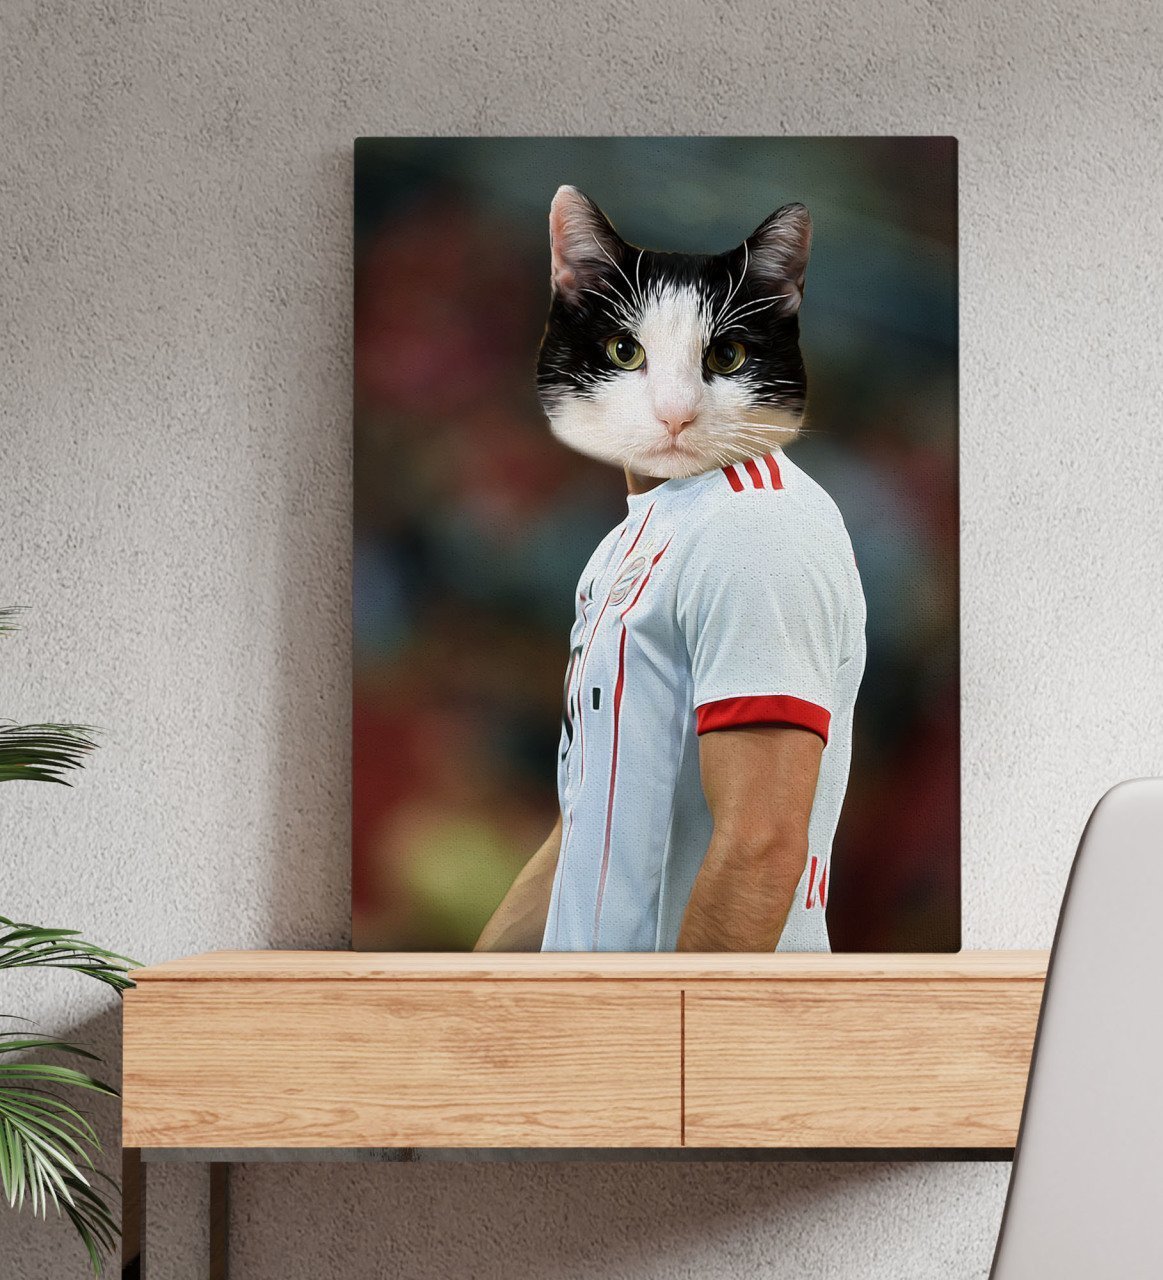 Evcil Dostlara Özel Futbolcu Tasarımlı Portre Kanvas Tablo 50x70cm-1